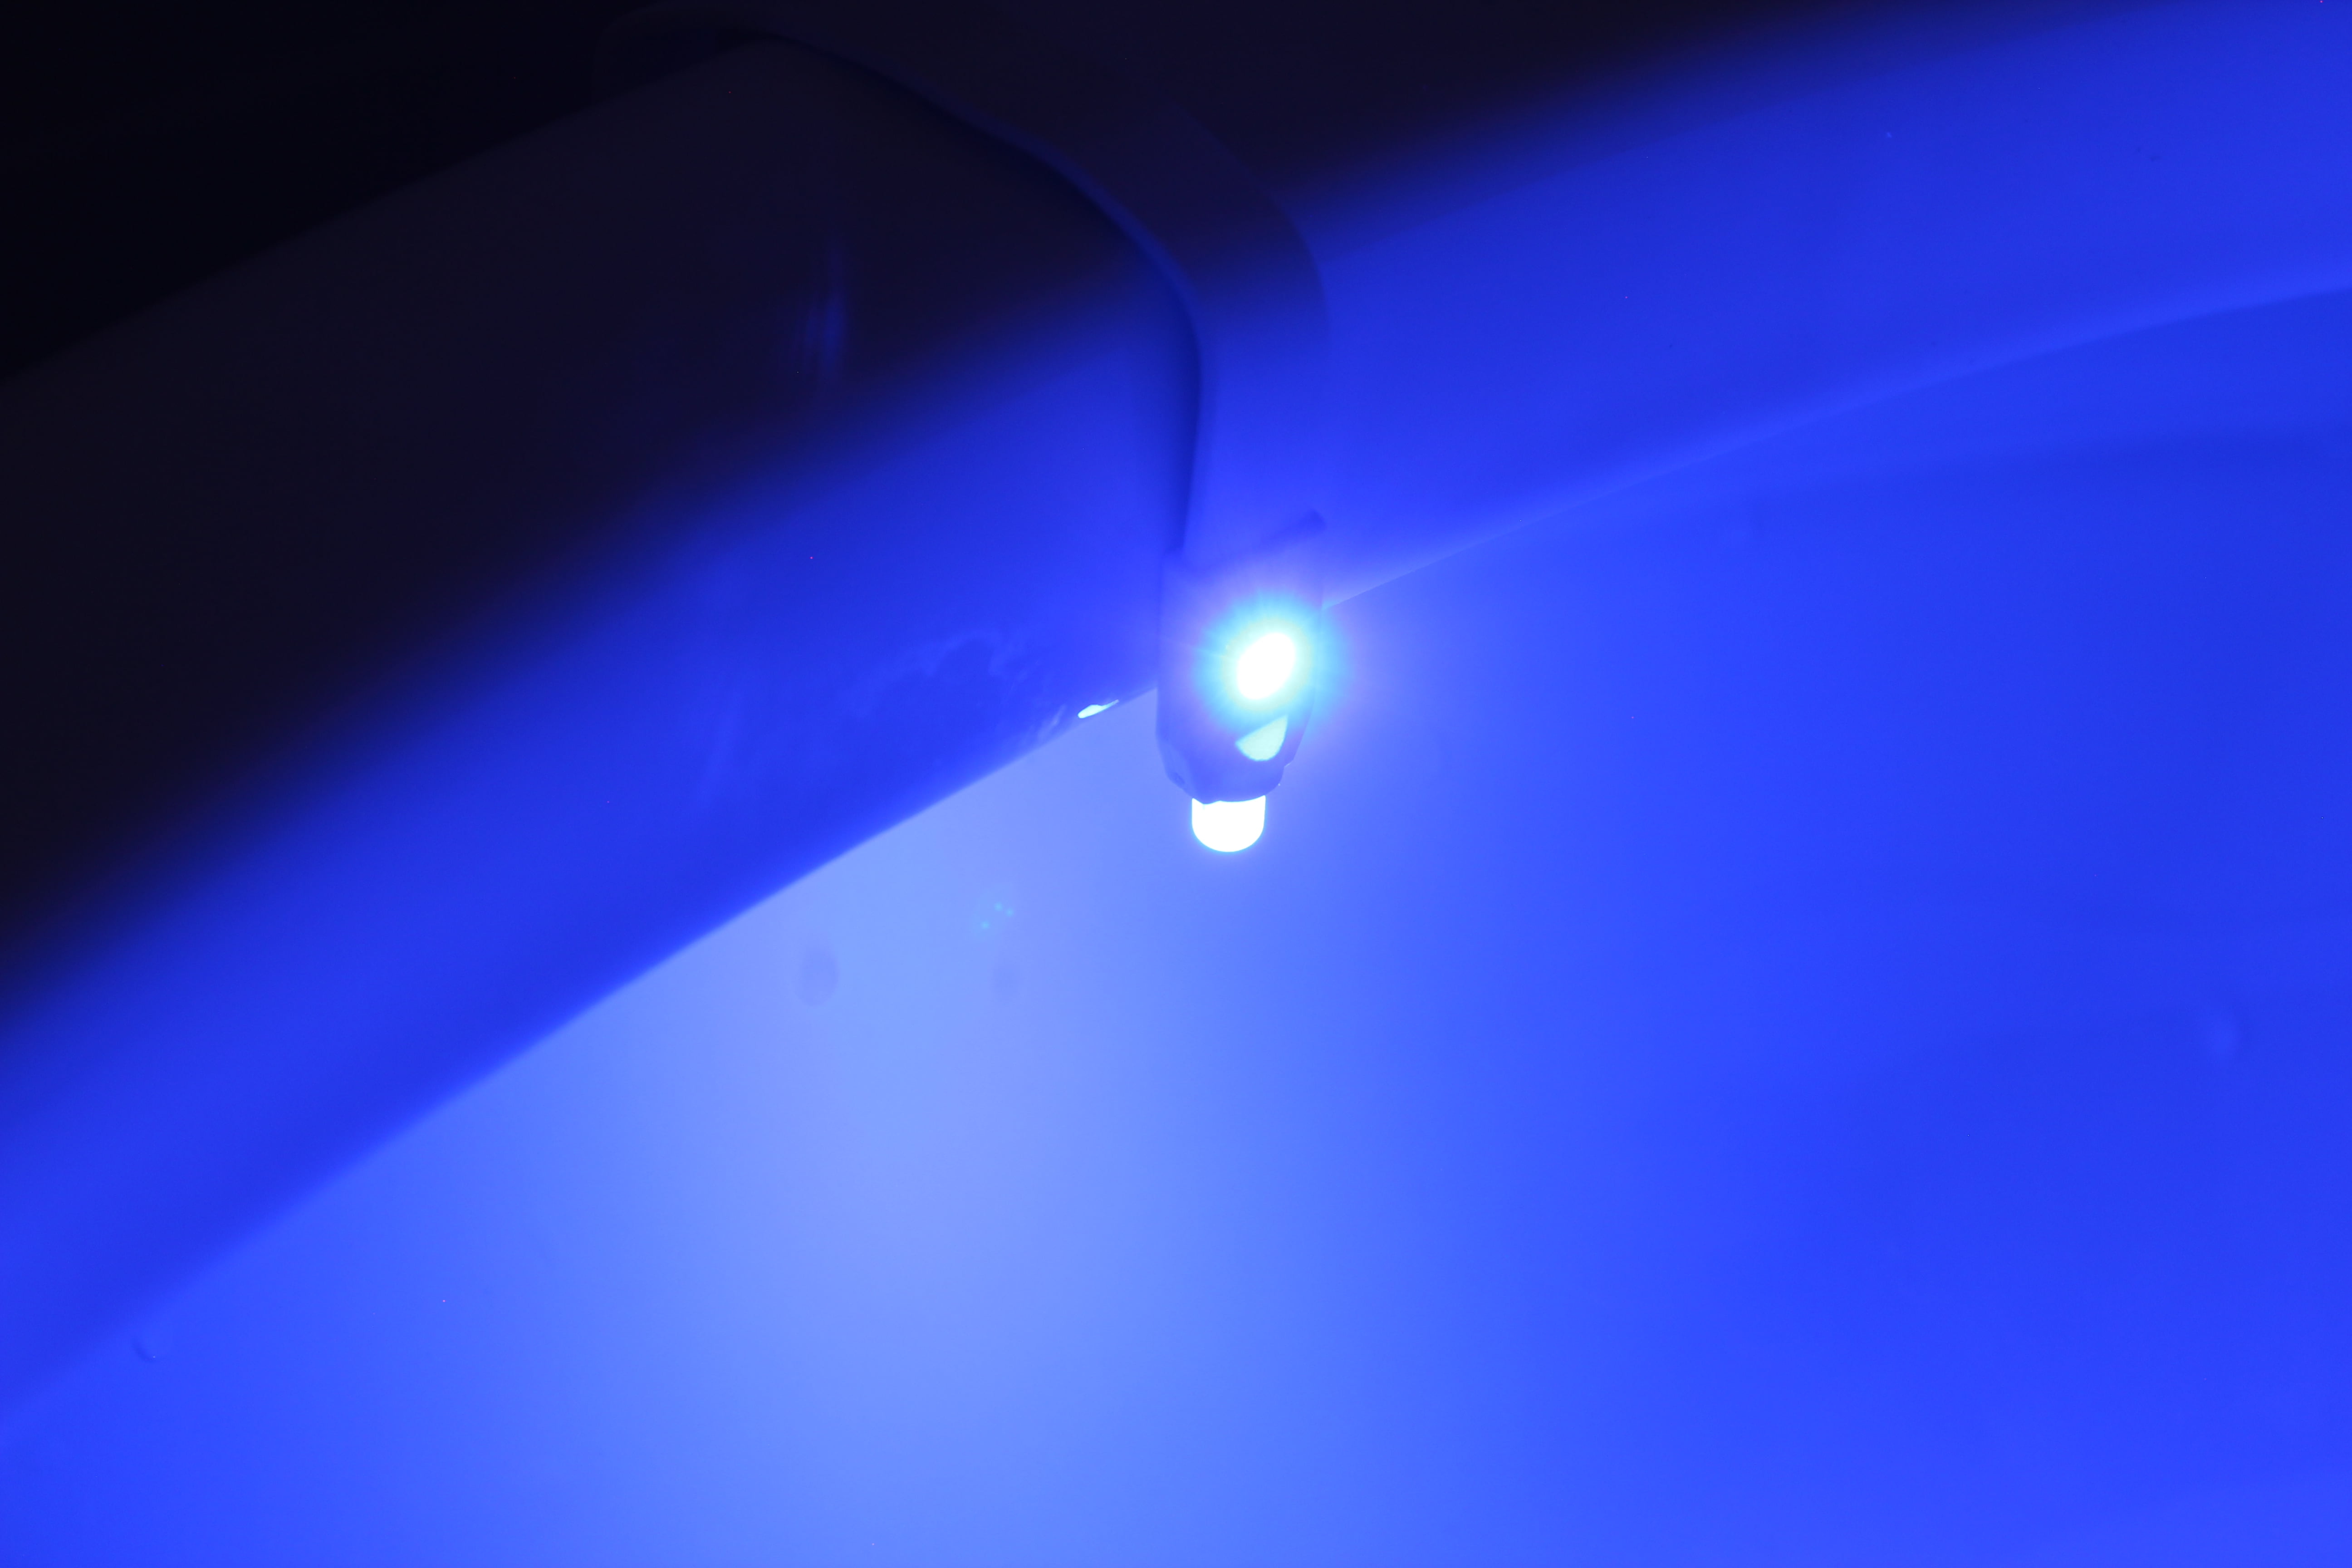 Illumibowl Germ Defense LED Motion-Sensing Toilet Night Light, 8